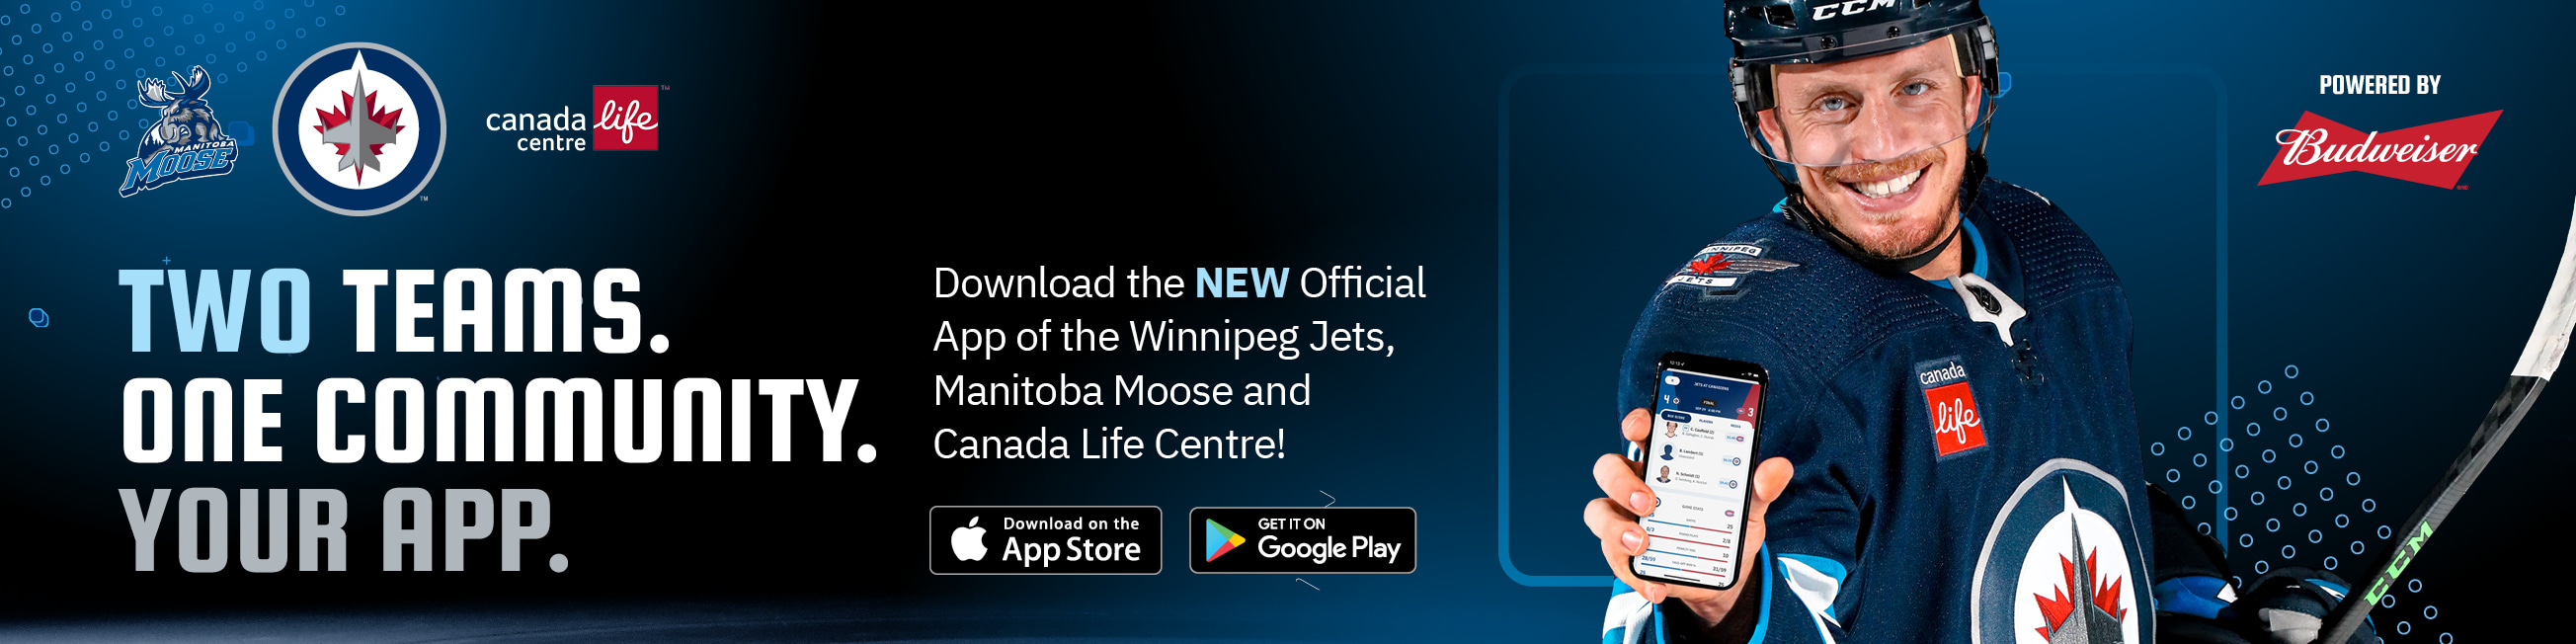 Printable 2022-2023 Winnipeg Jets Schedule